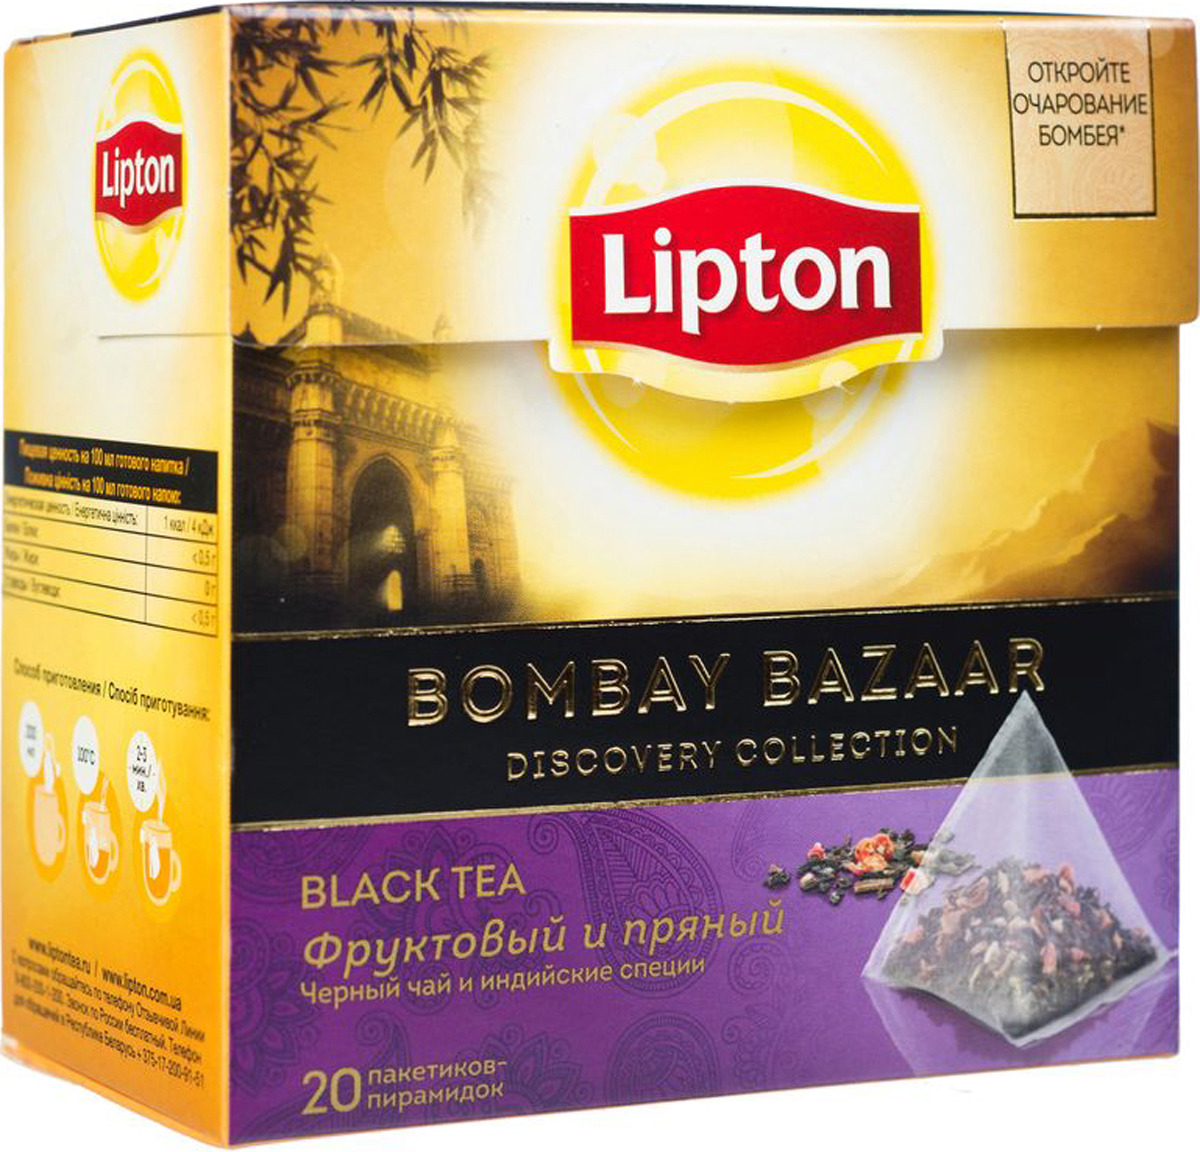 Lipton Черный чай Bombay Bazaar 20 шт